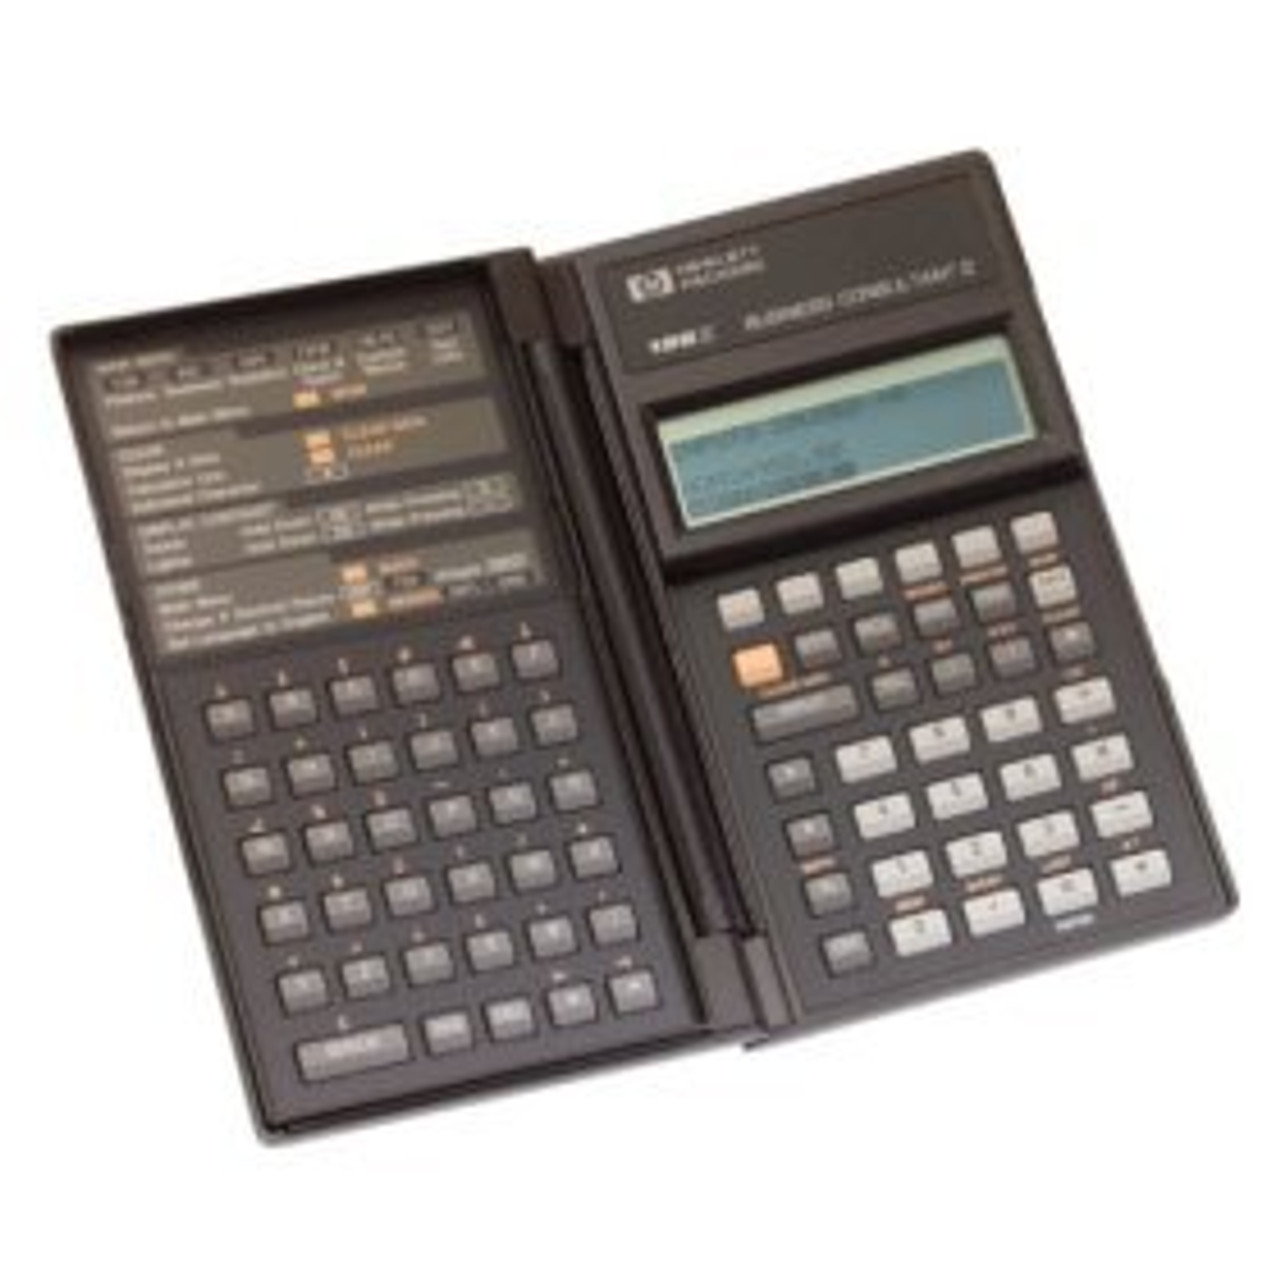 HP-19Bii Business Financial Calculator - Porter Electronics